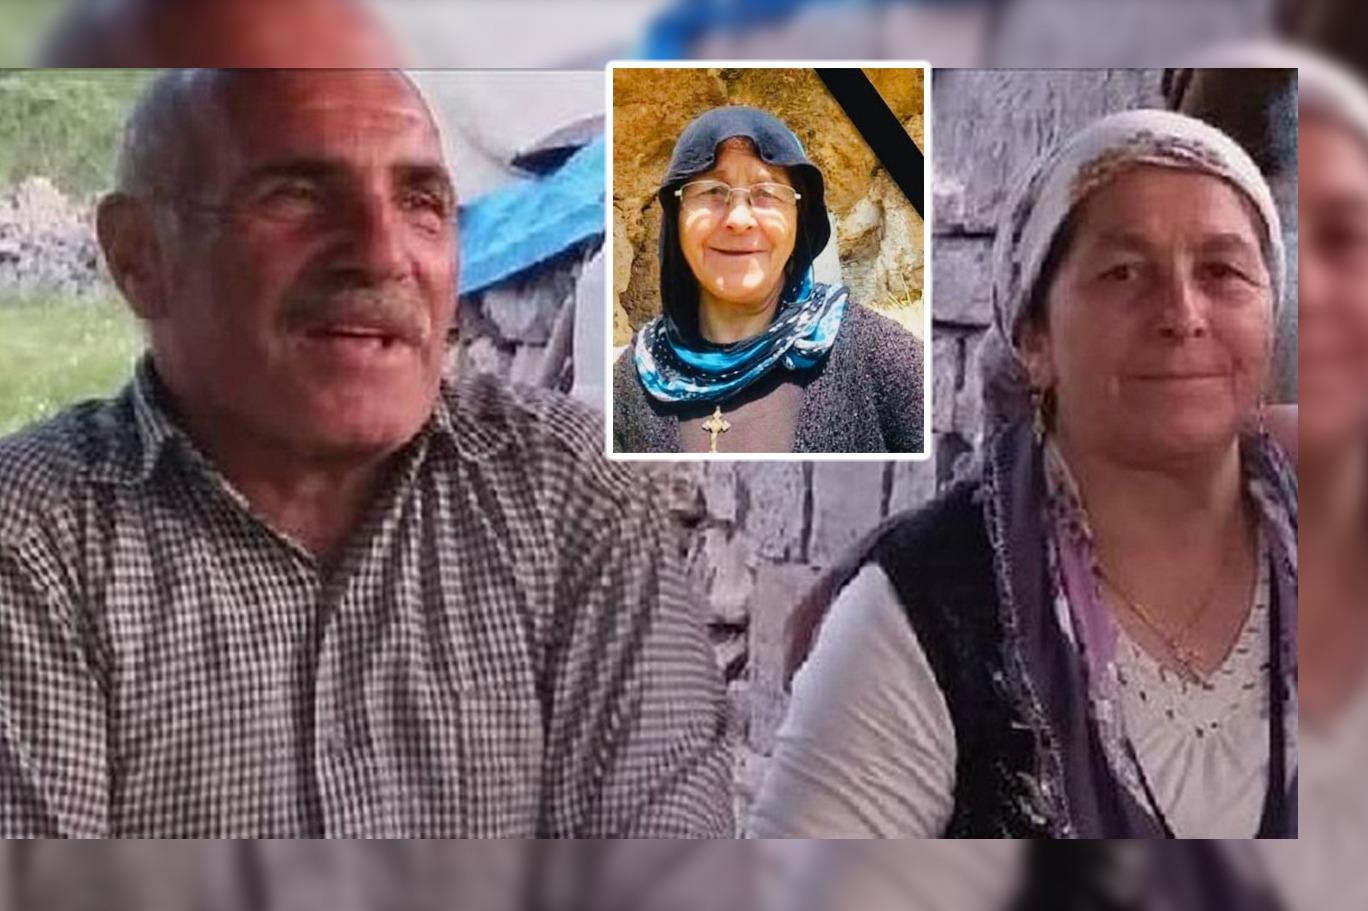 Did PKK kill the Chaldean Couple?